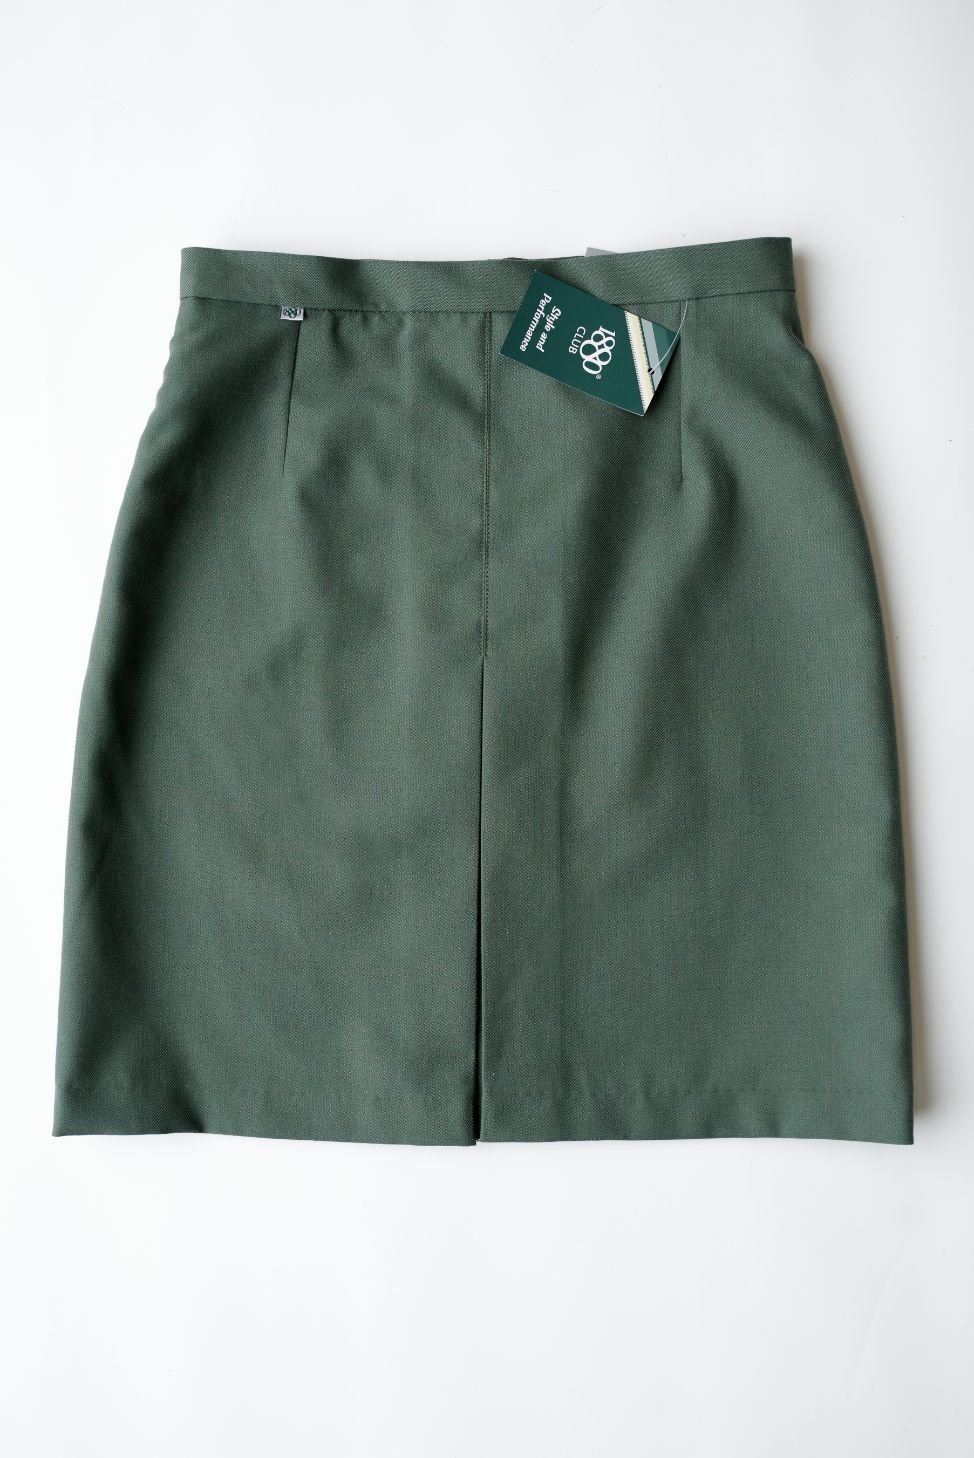 1880 green pleat school skirt